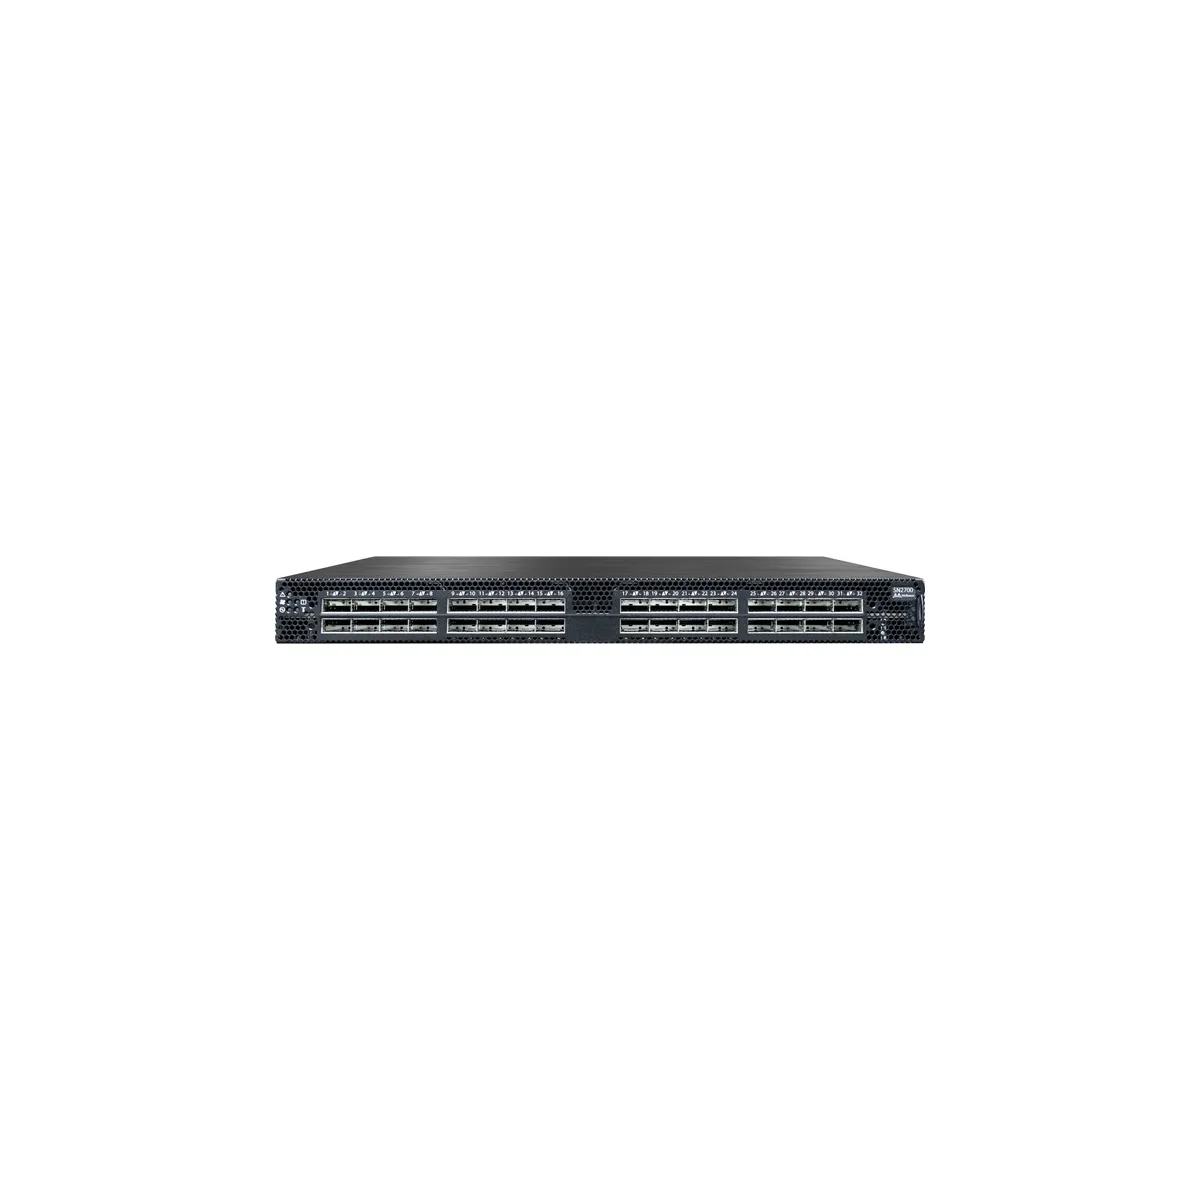 Mellanox SN2700 ONIE 32-Port QSFP28 100GbE Managed Switch